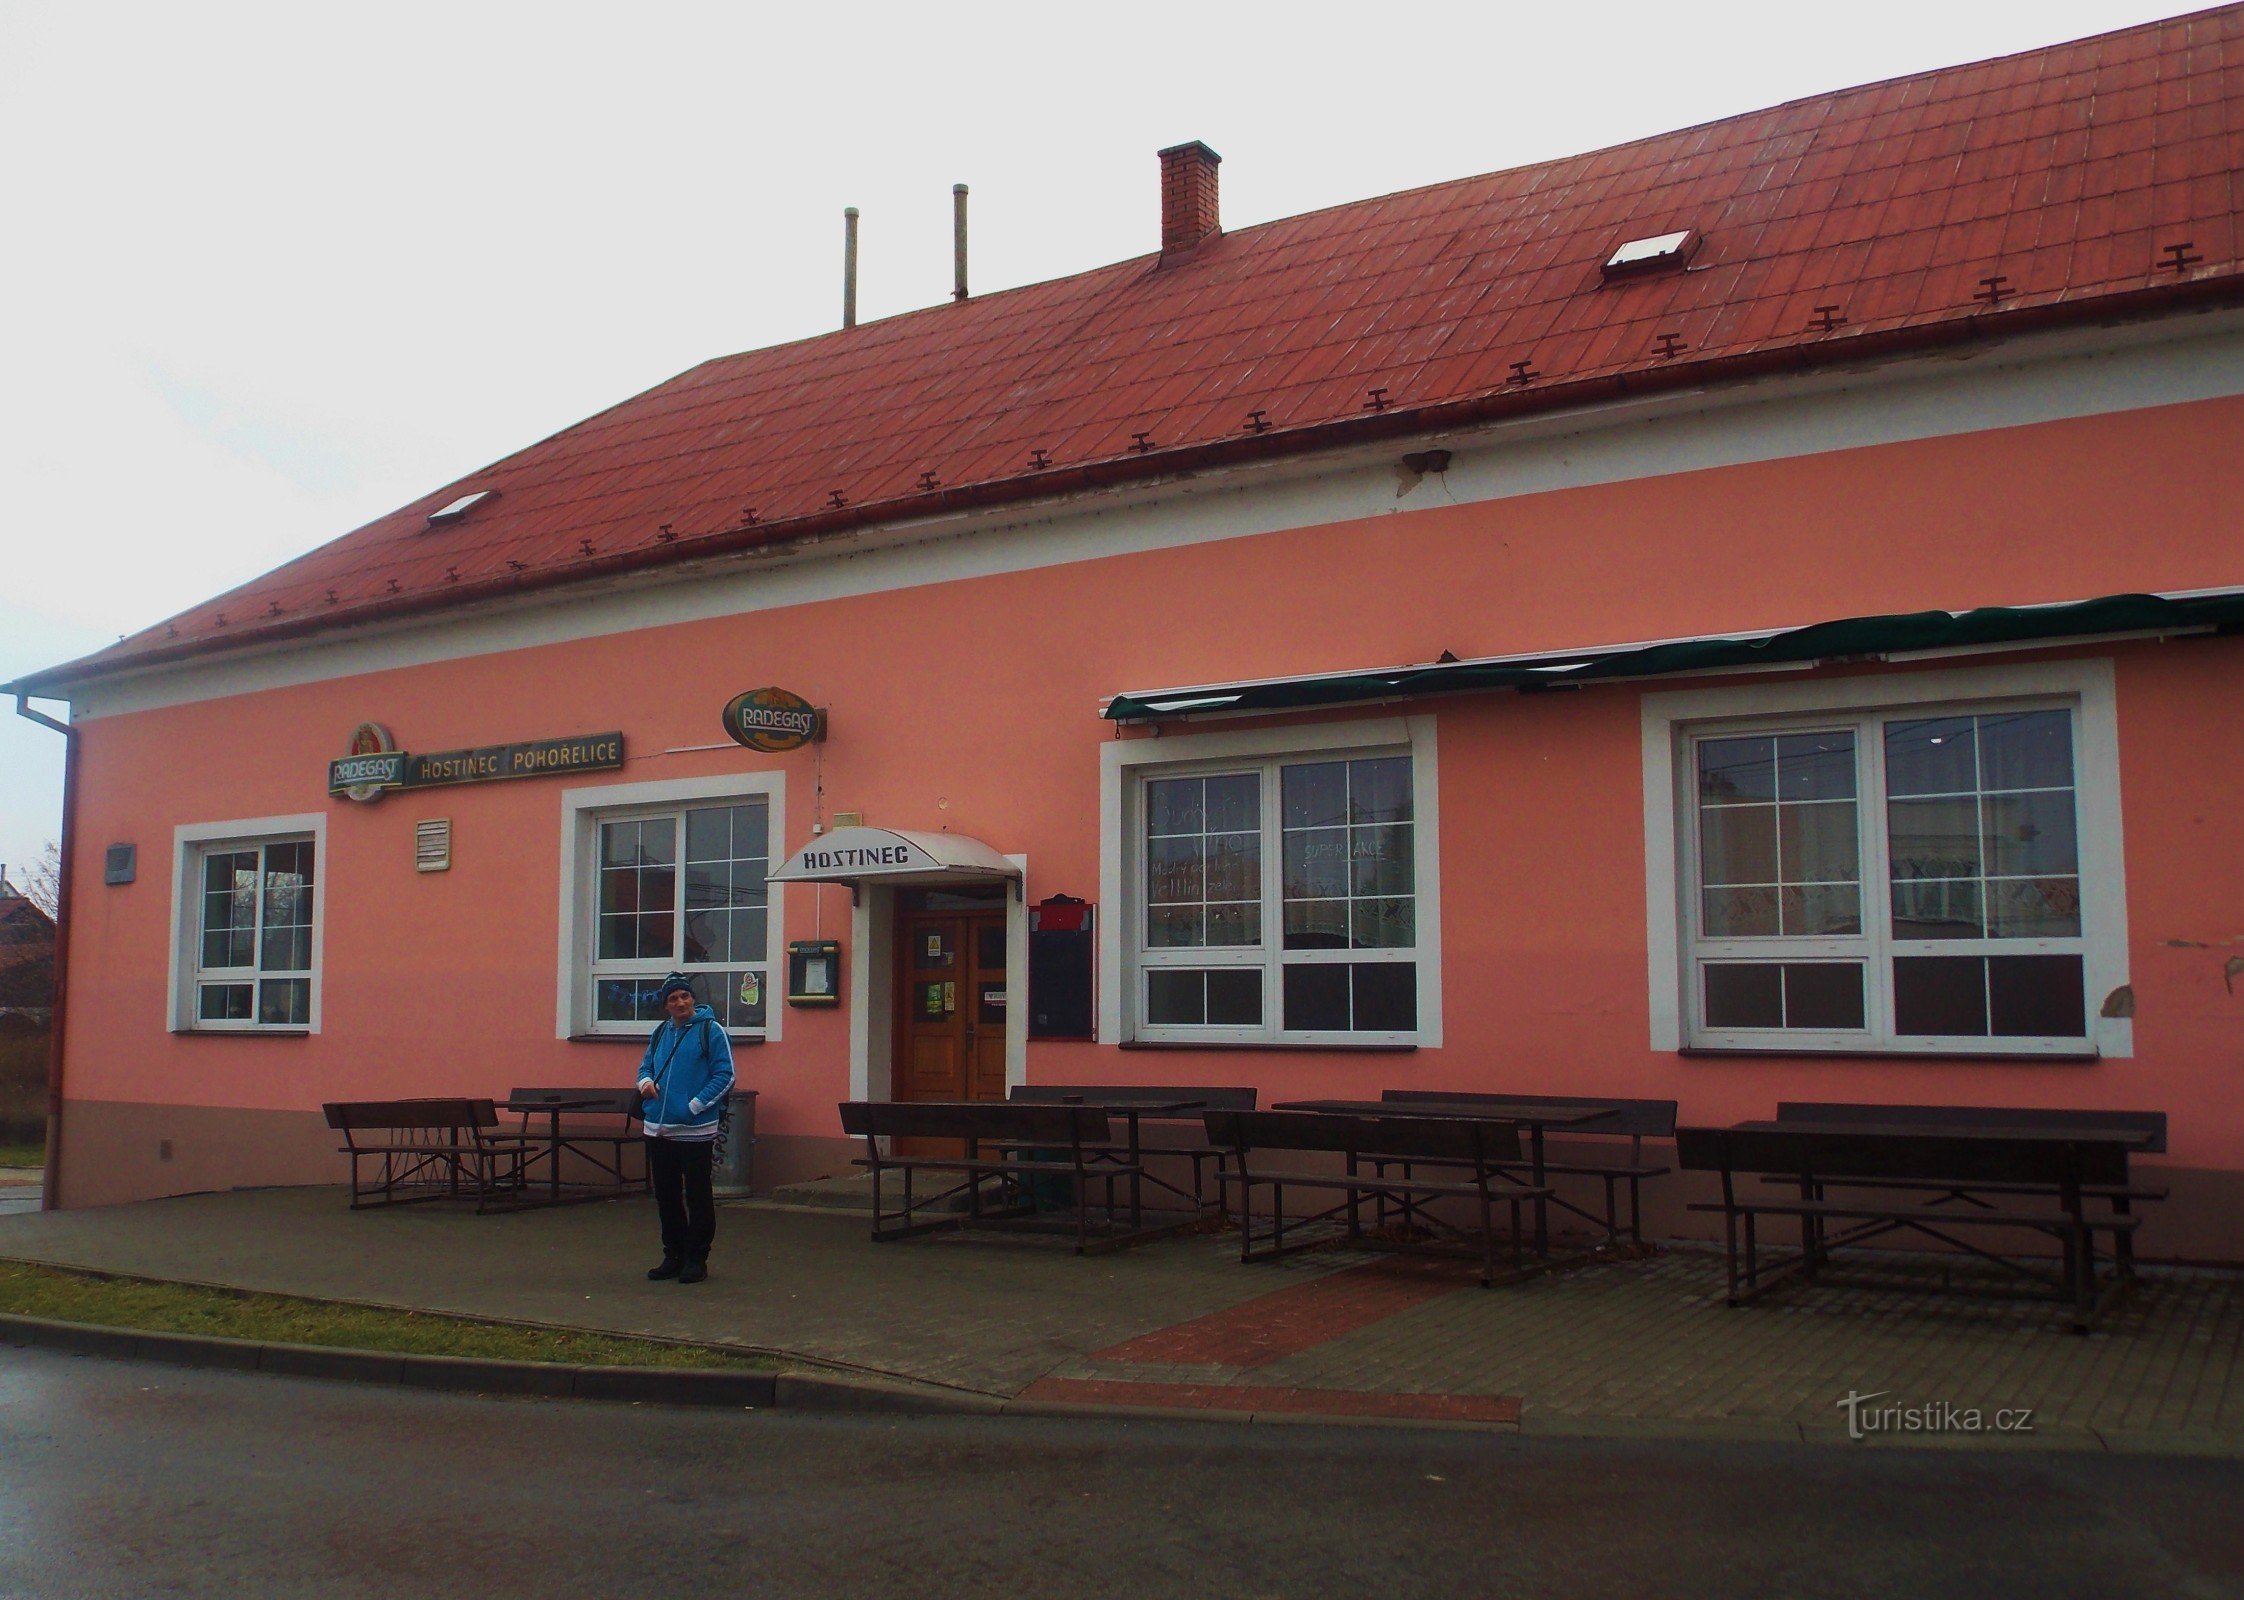 Inn ở Pohořelice gần Zlín